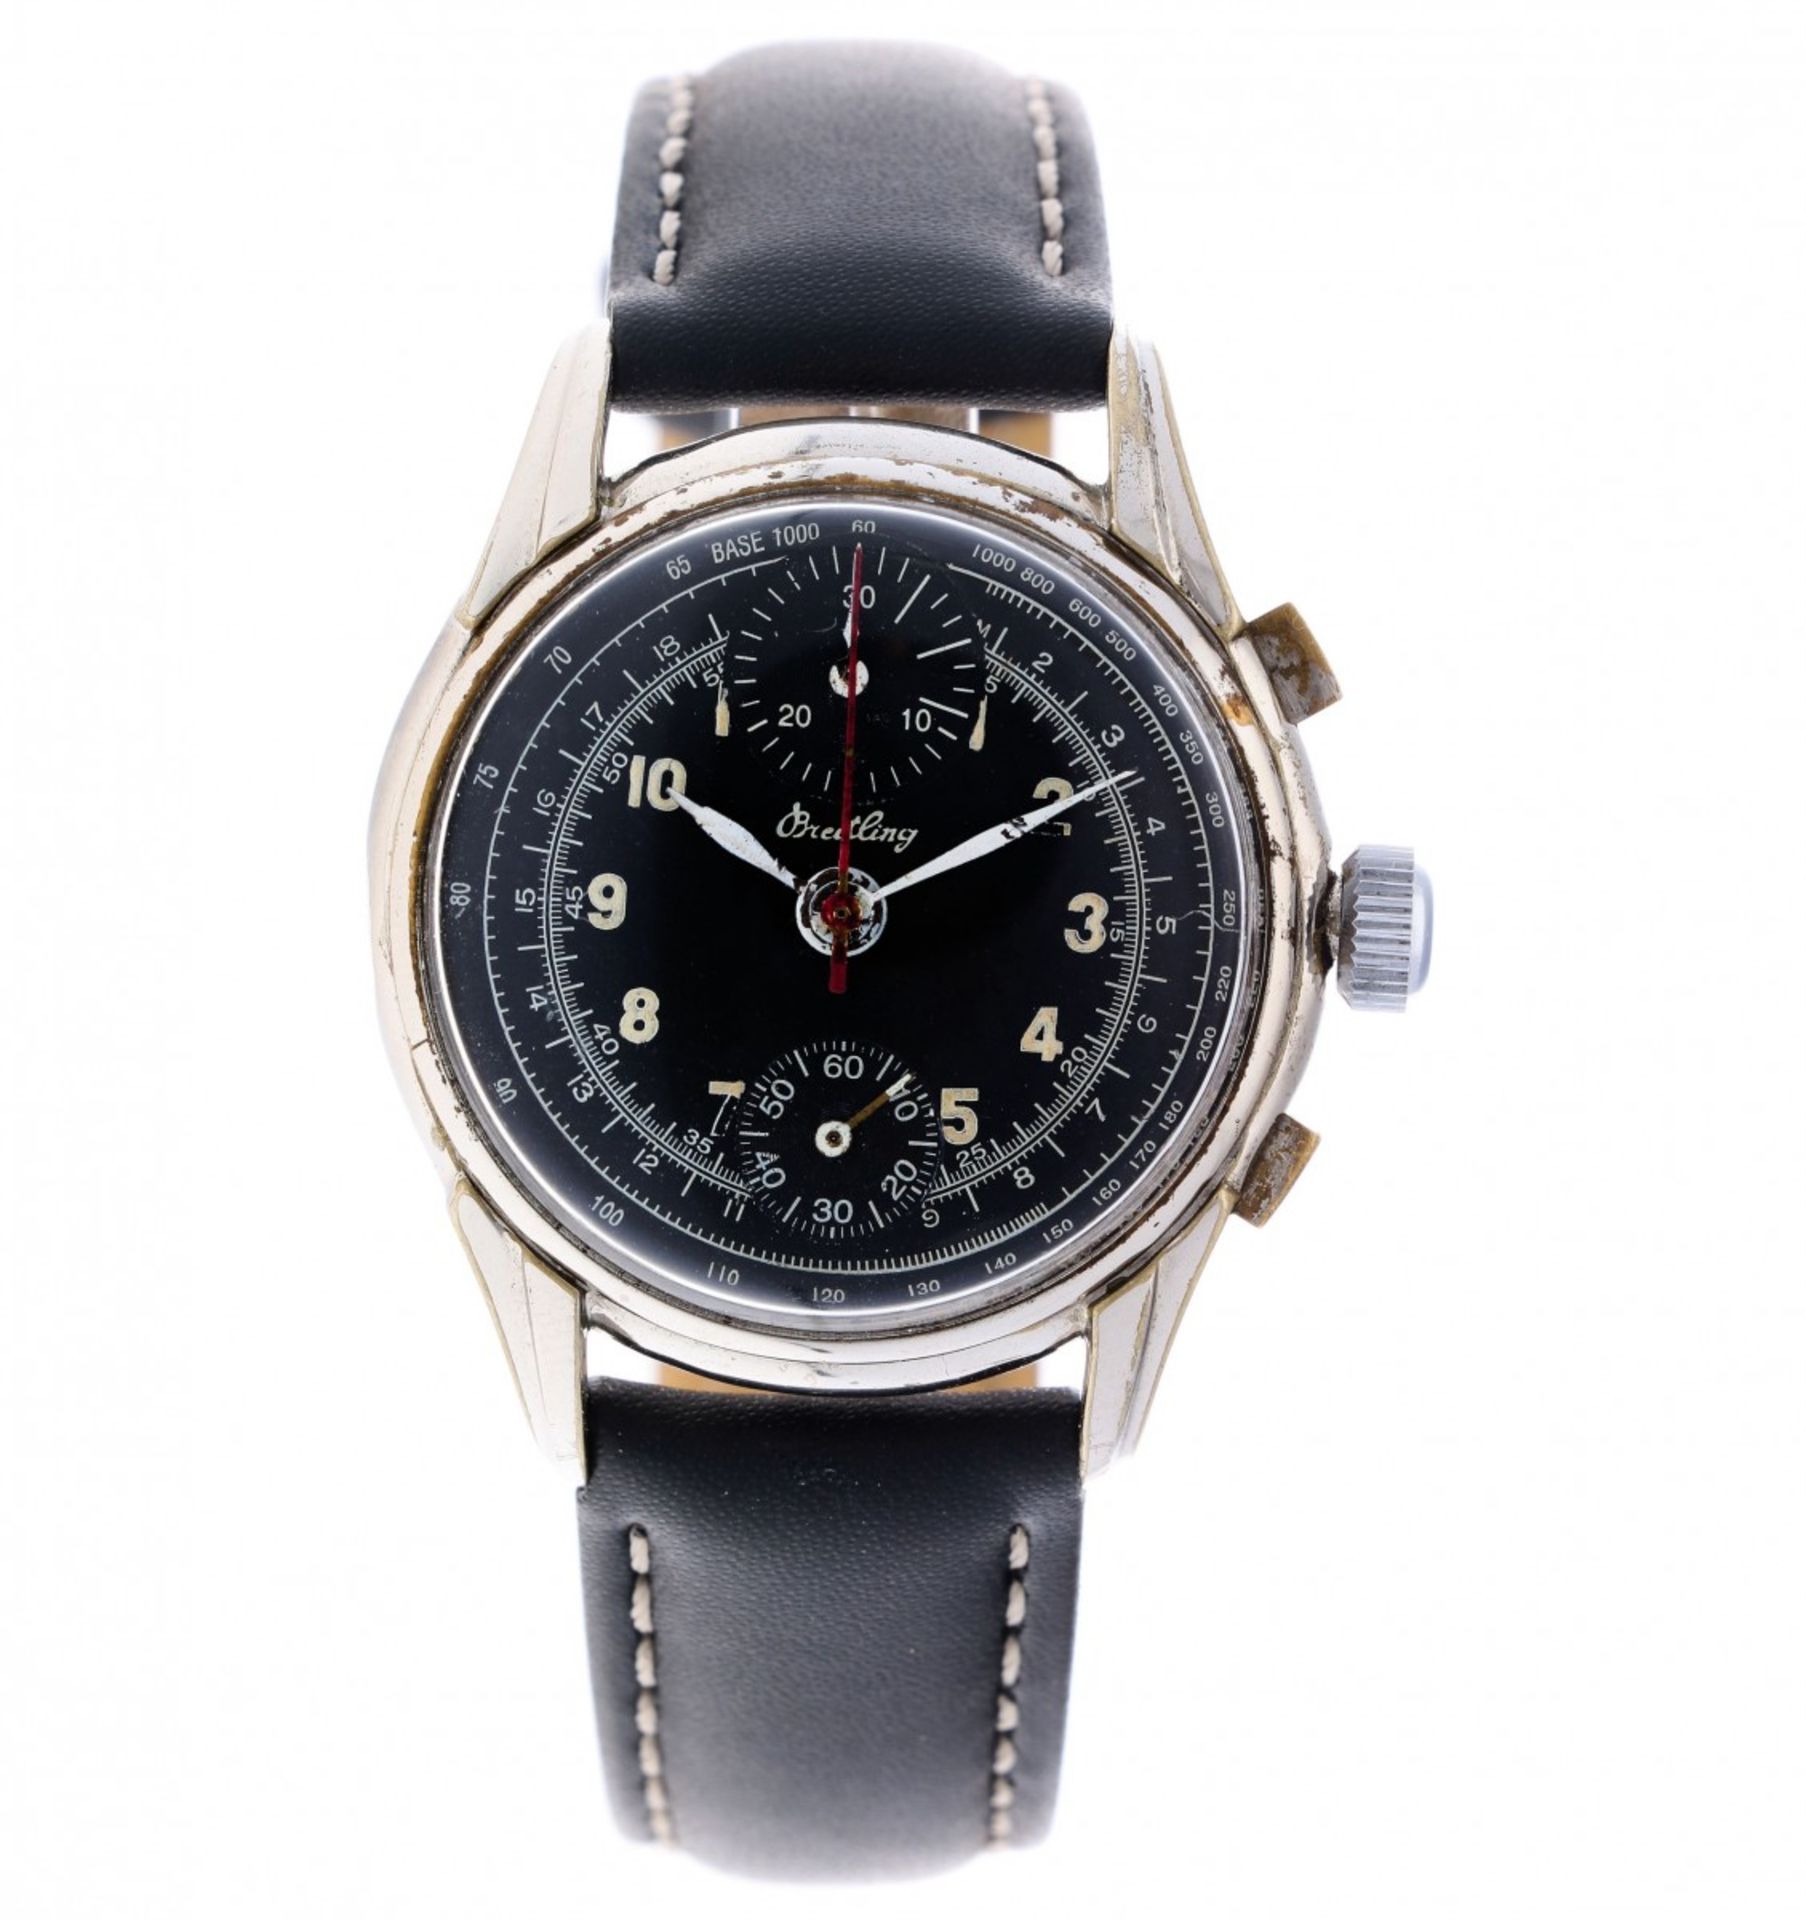 Breitling Vintage Chronograph - Men's watch - ca. 1940